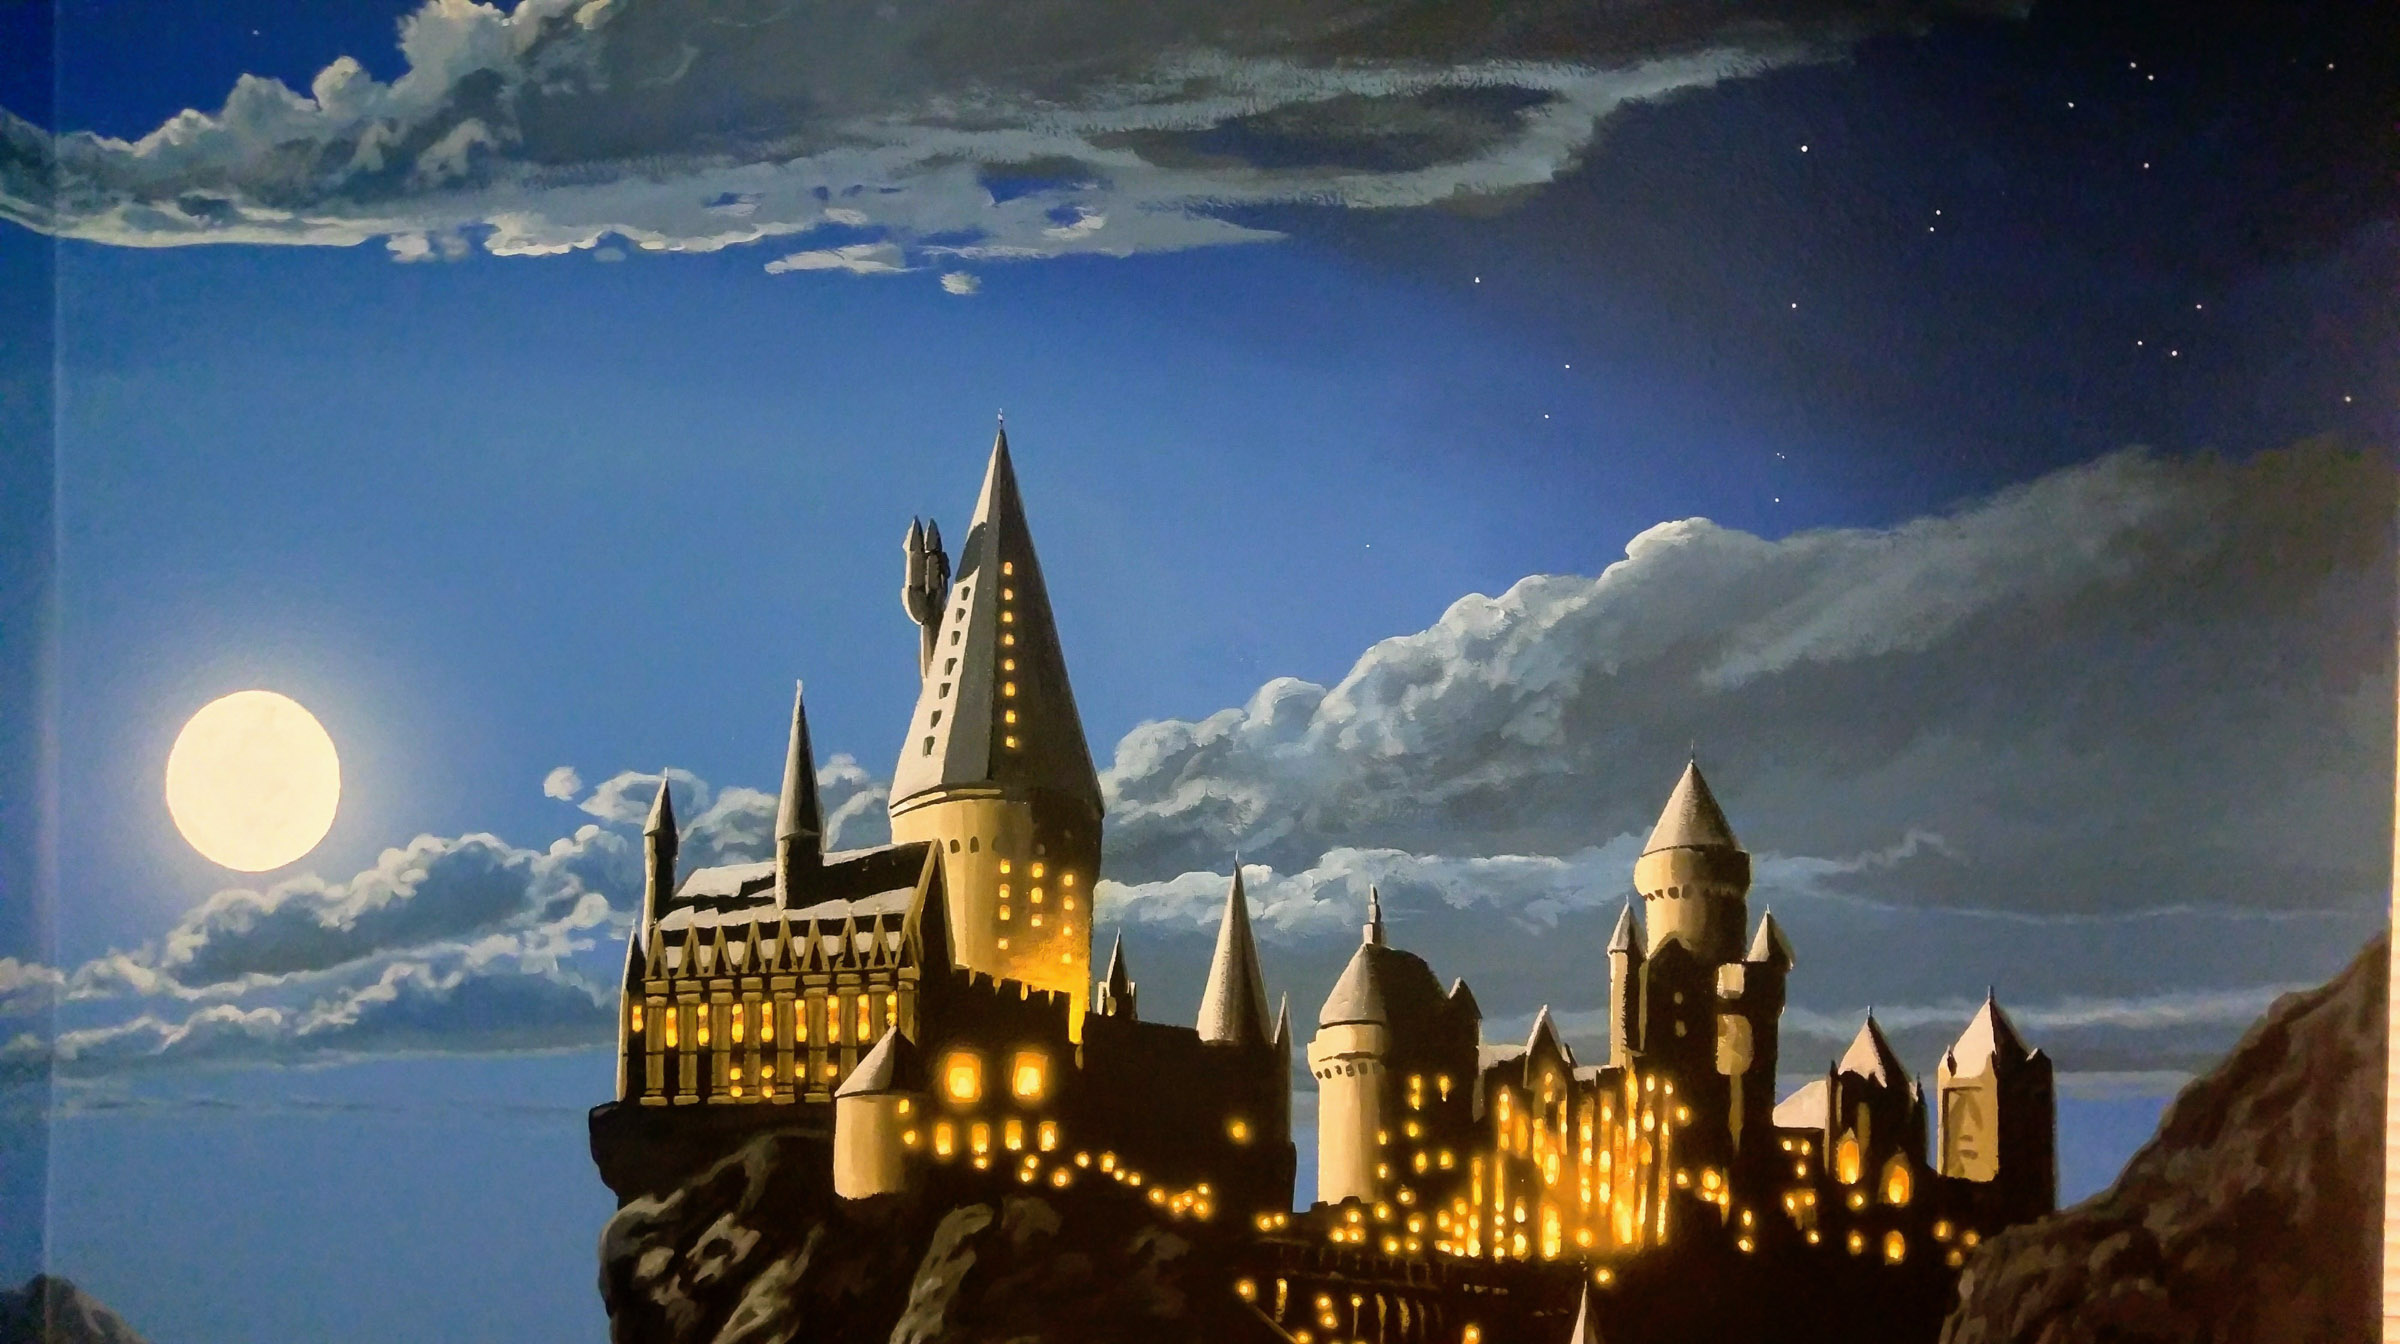 Harry Potter Mural - Hogwarts under a full moon